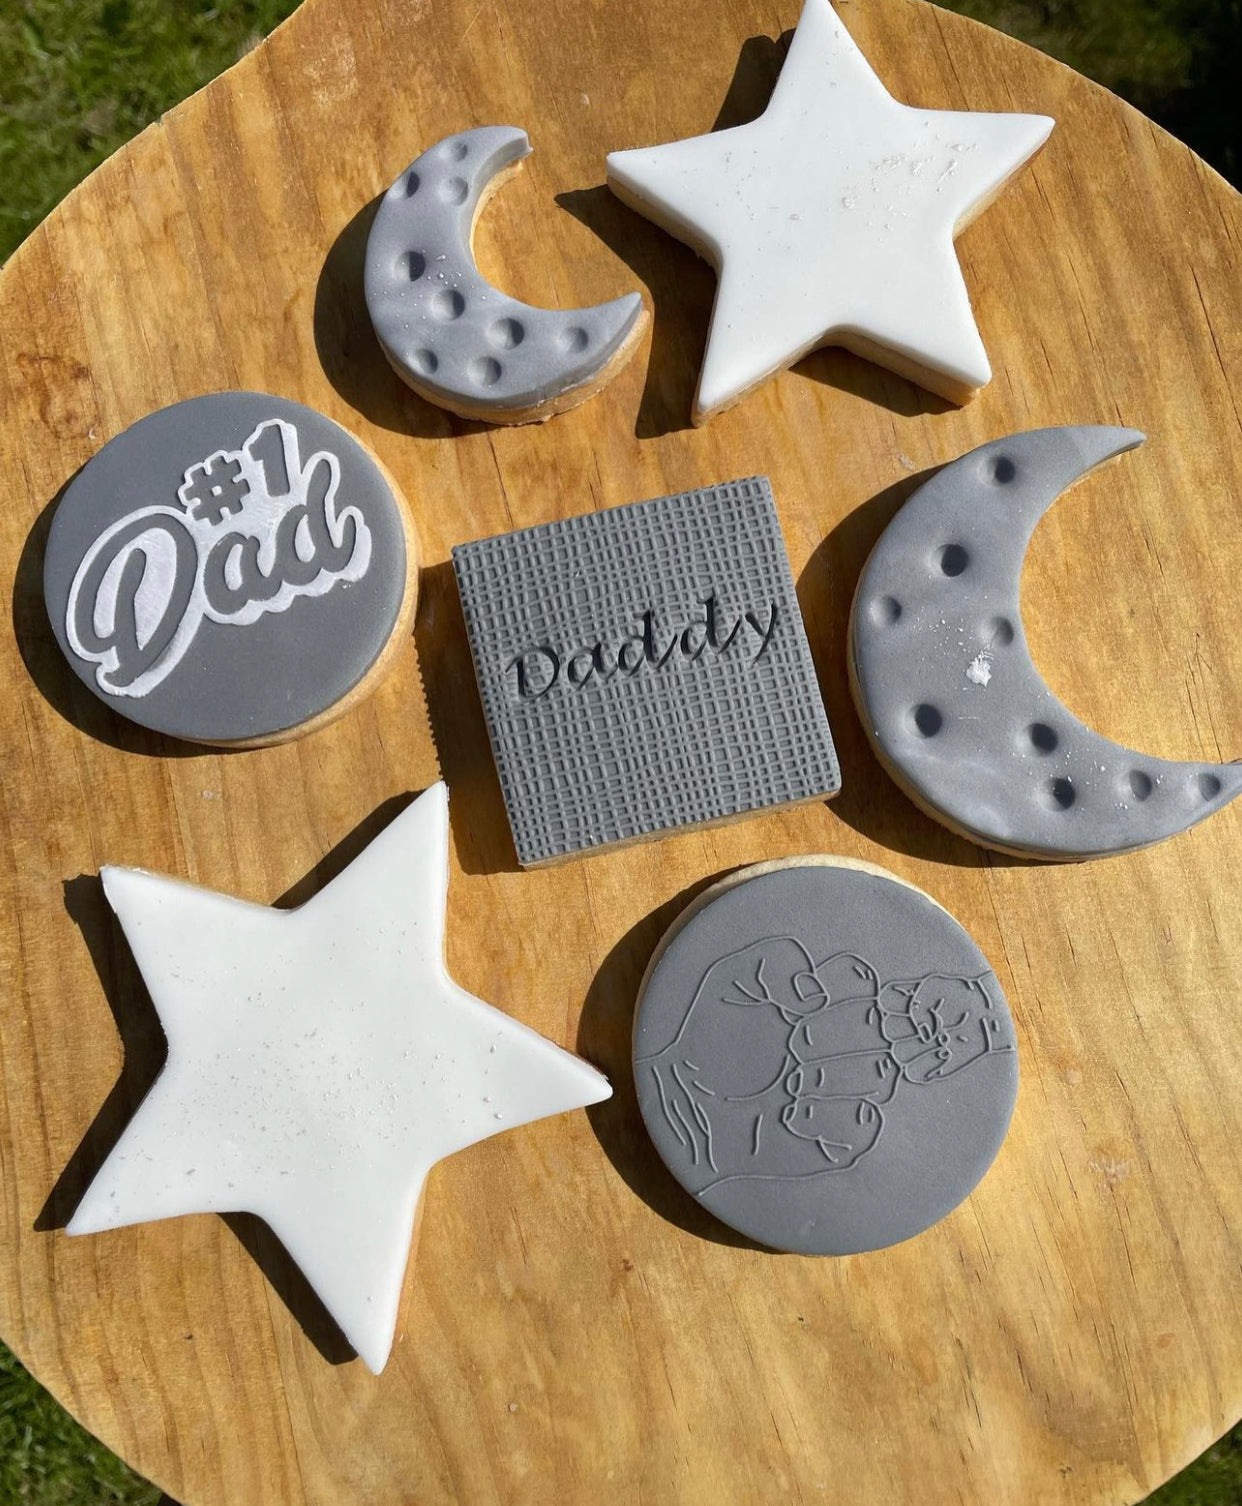 Dad - debossing acrylic stamp MEG cookie cutters